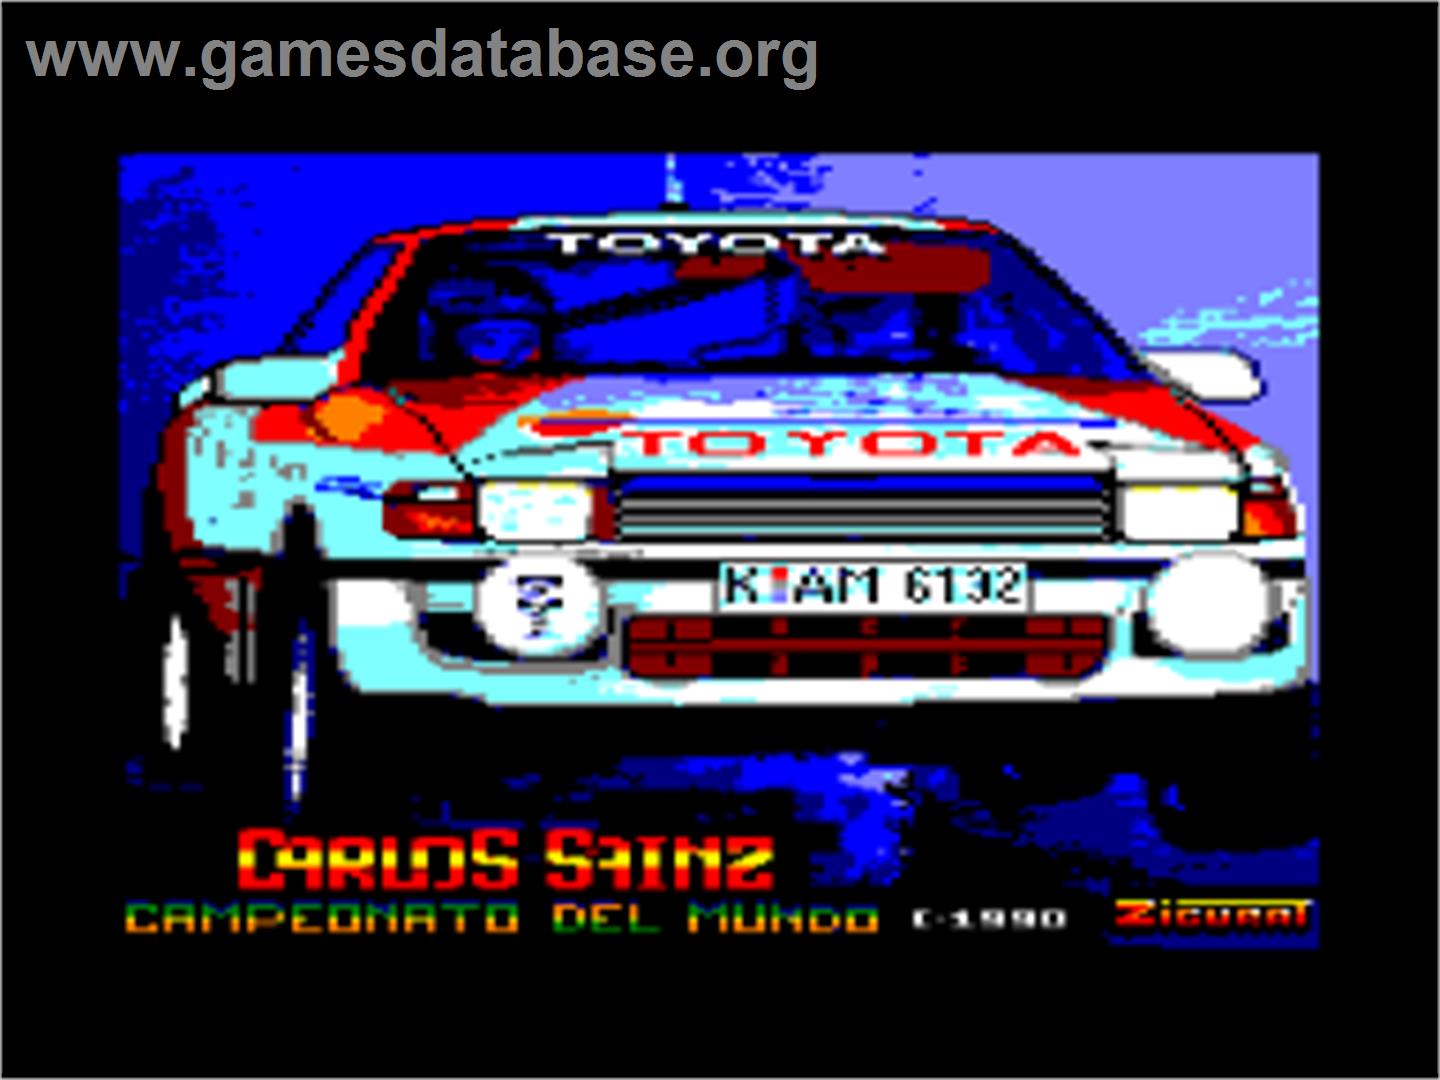 Carlos Sainz - Amstrad CPC - Artwork - Title Screen